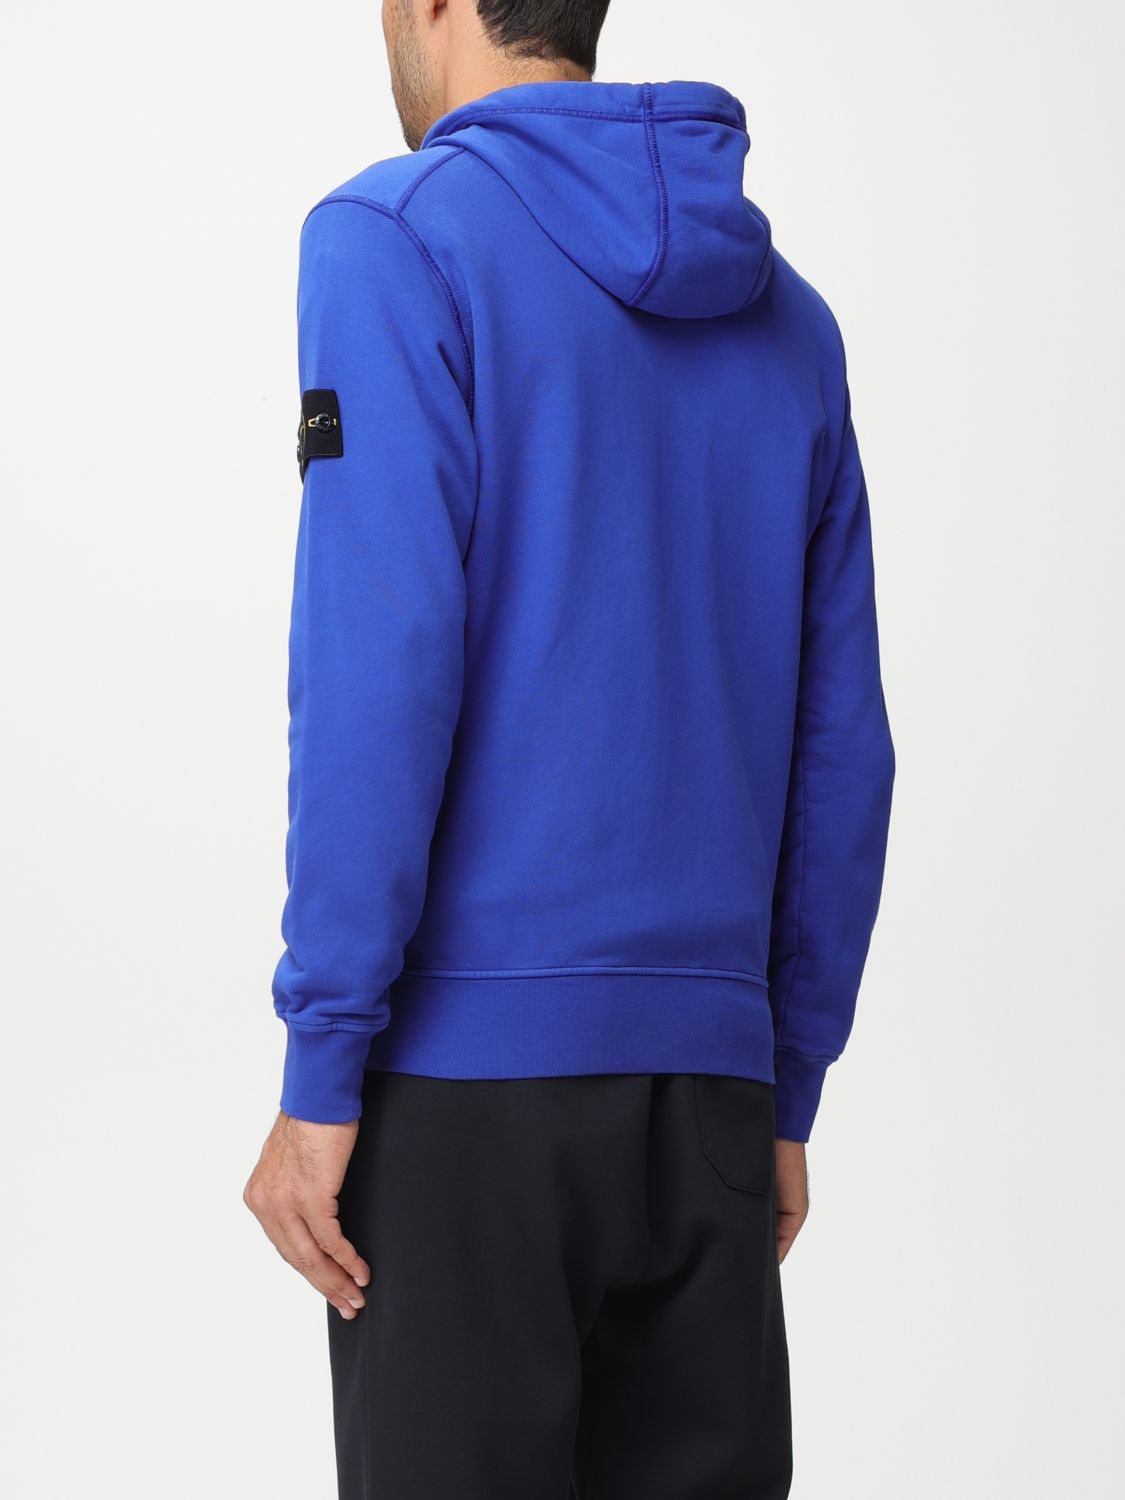 STONE ISLAND: Sweatshirt homme - Bleu Royal  Sweatshirt Stone Island 64151  en ligne sur